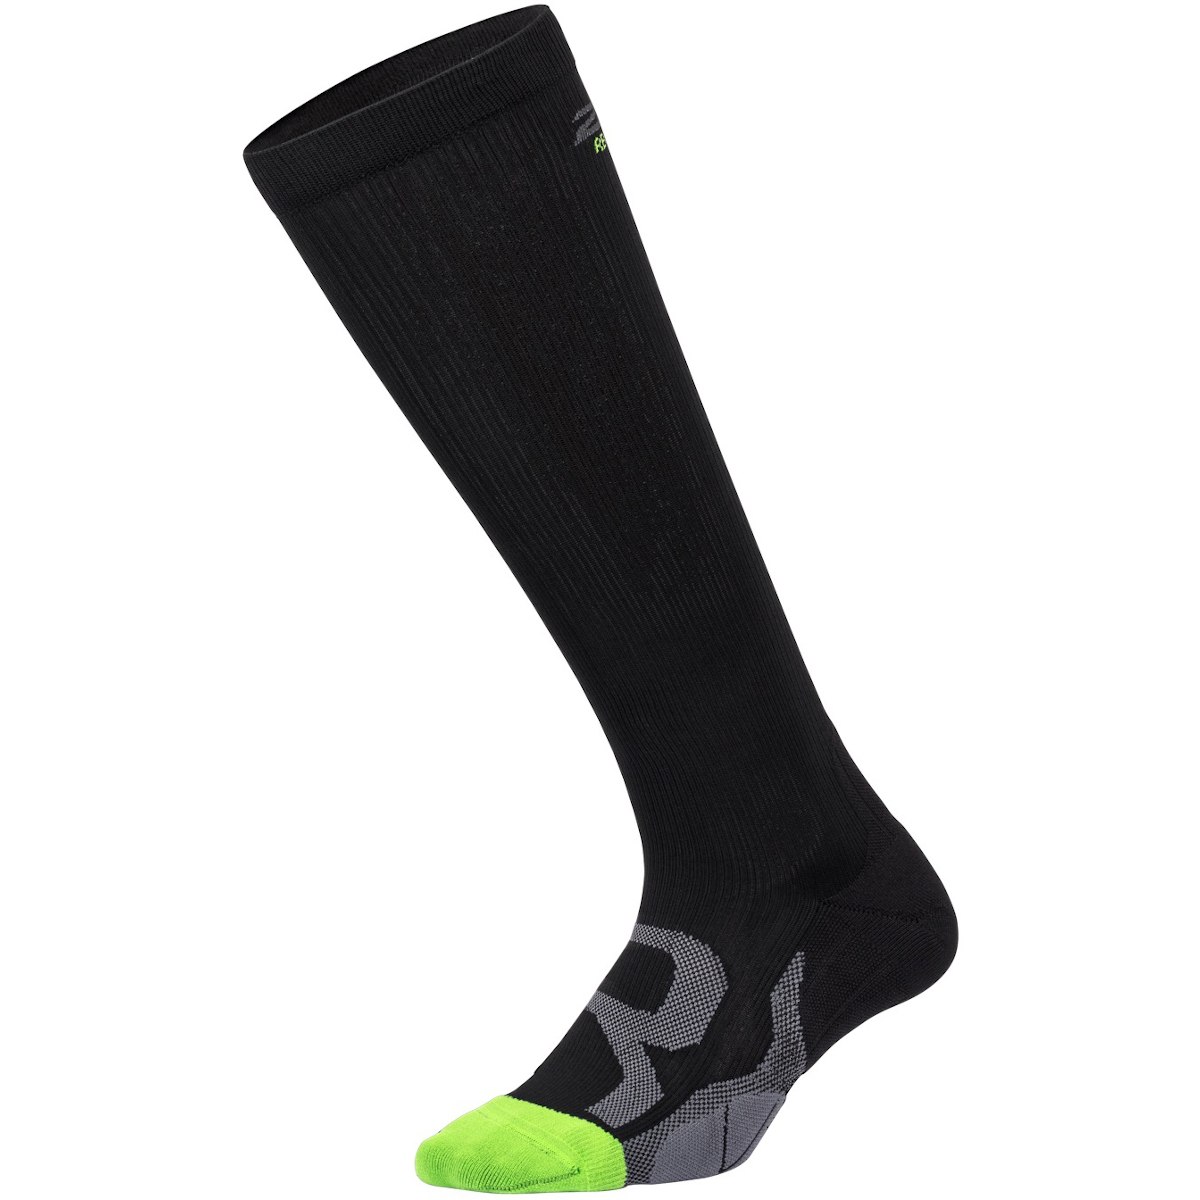 Bild von 2XU Compression Socks for Recovery - schmal - black